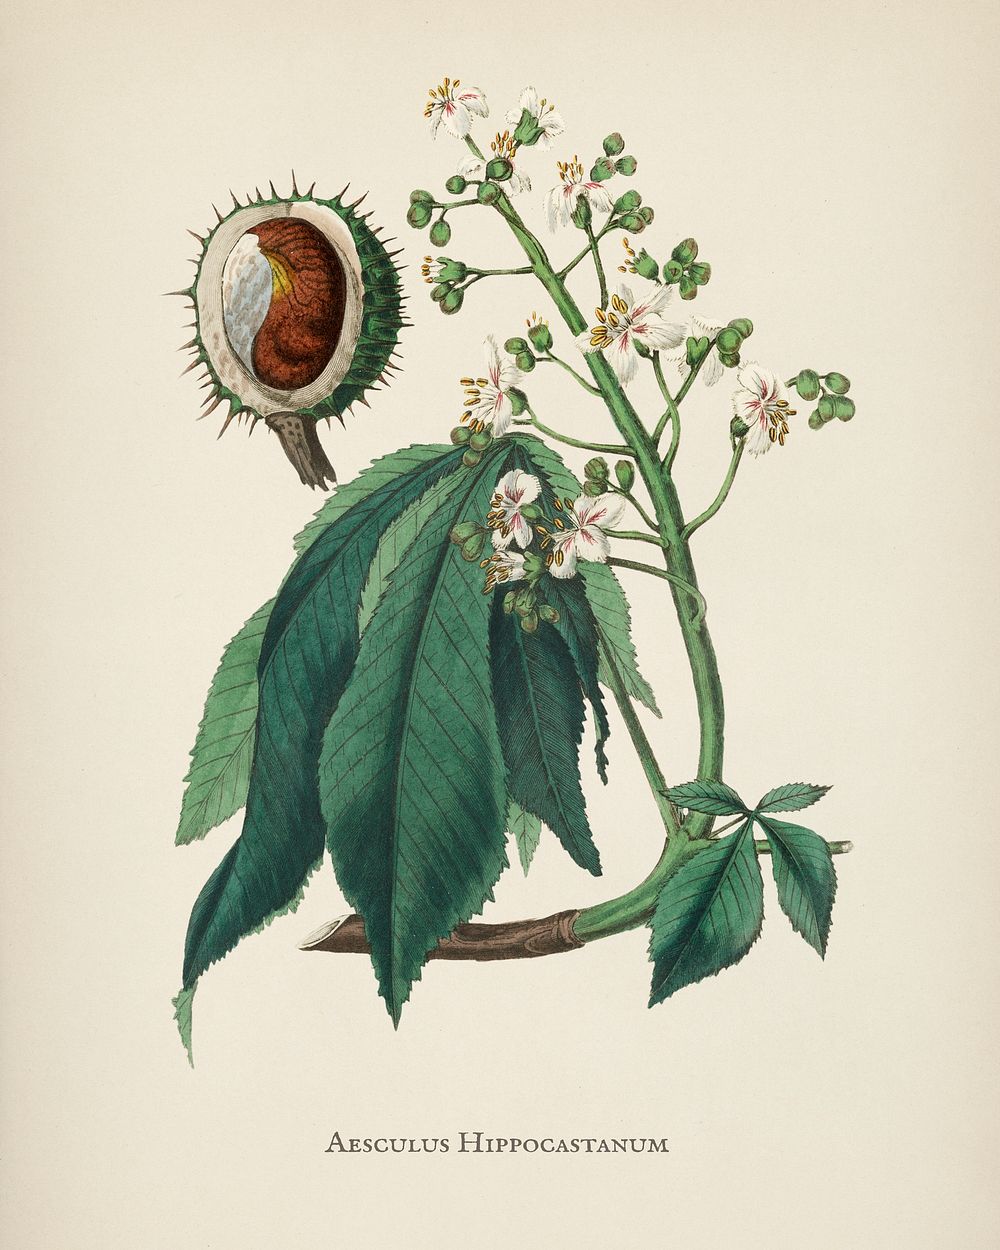 European horse-chestnut (Aesculus hippocastanum) illustration from Medical Botany (1836) by John Stephenson and James Morss…